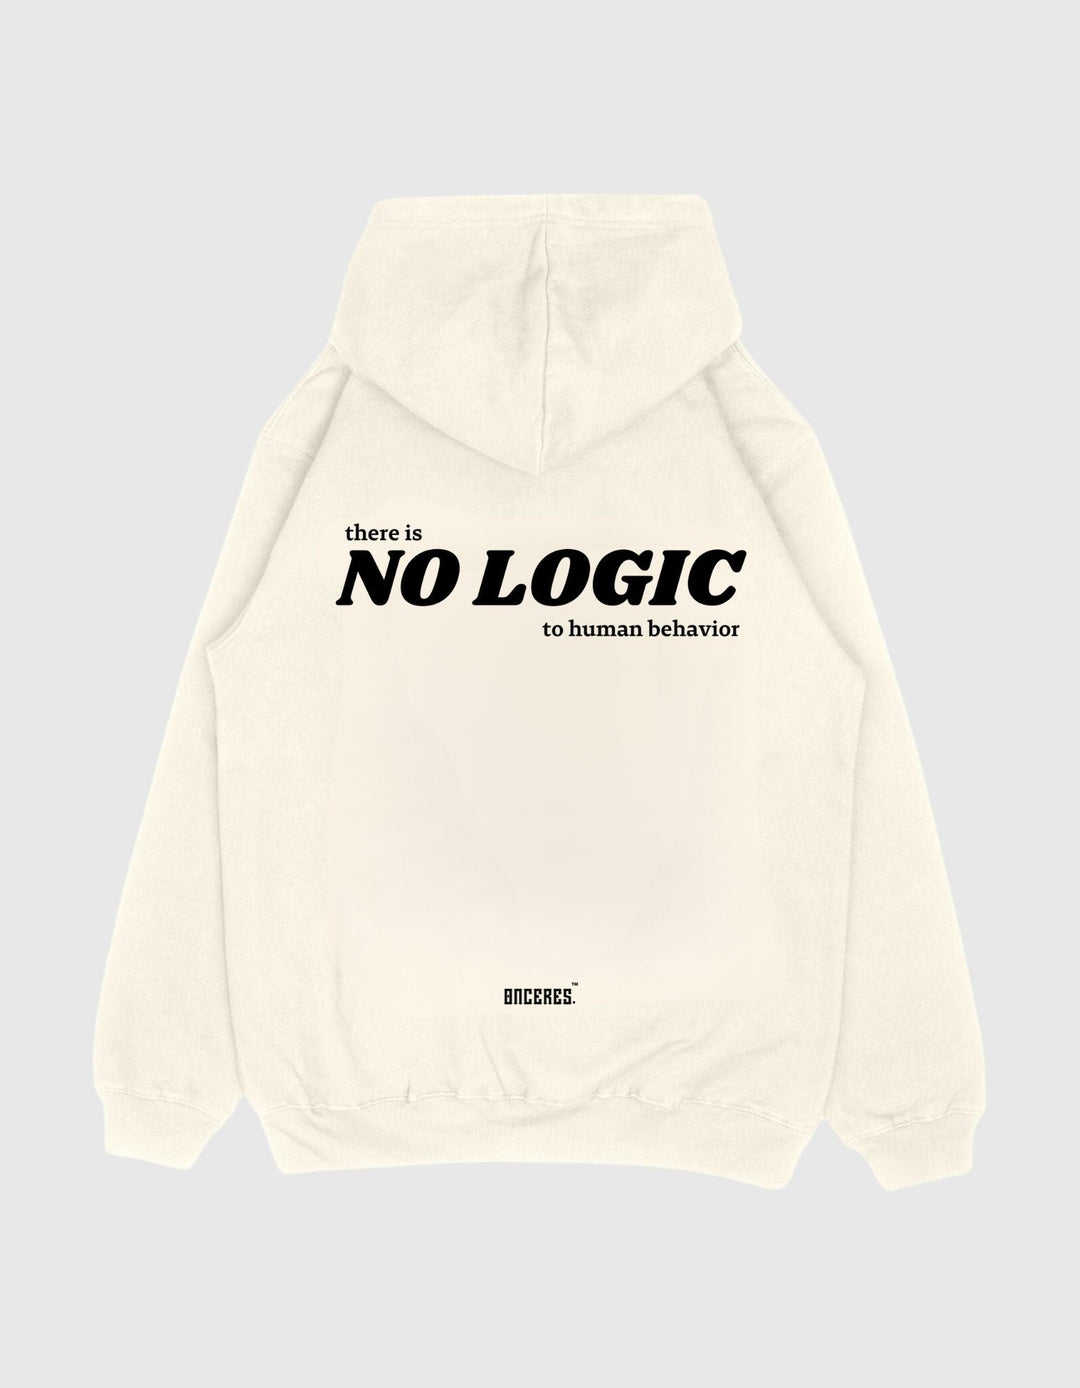 No Logic [S] - Onceres™